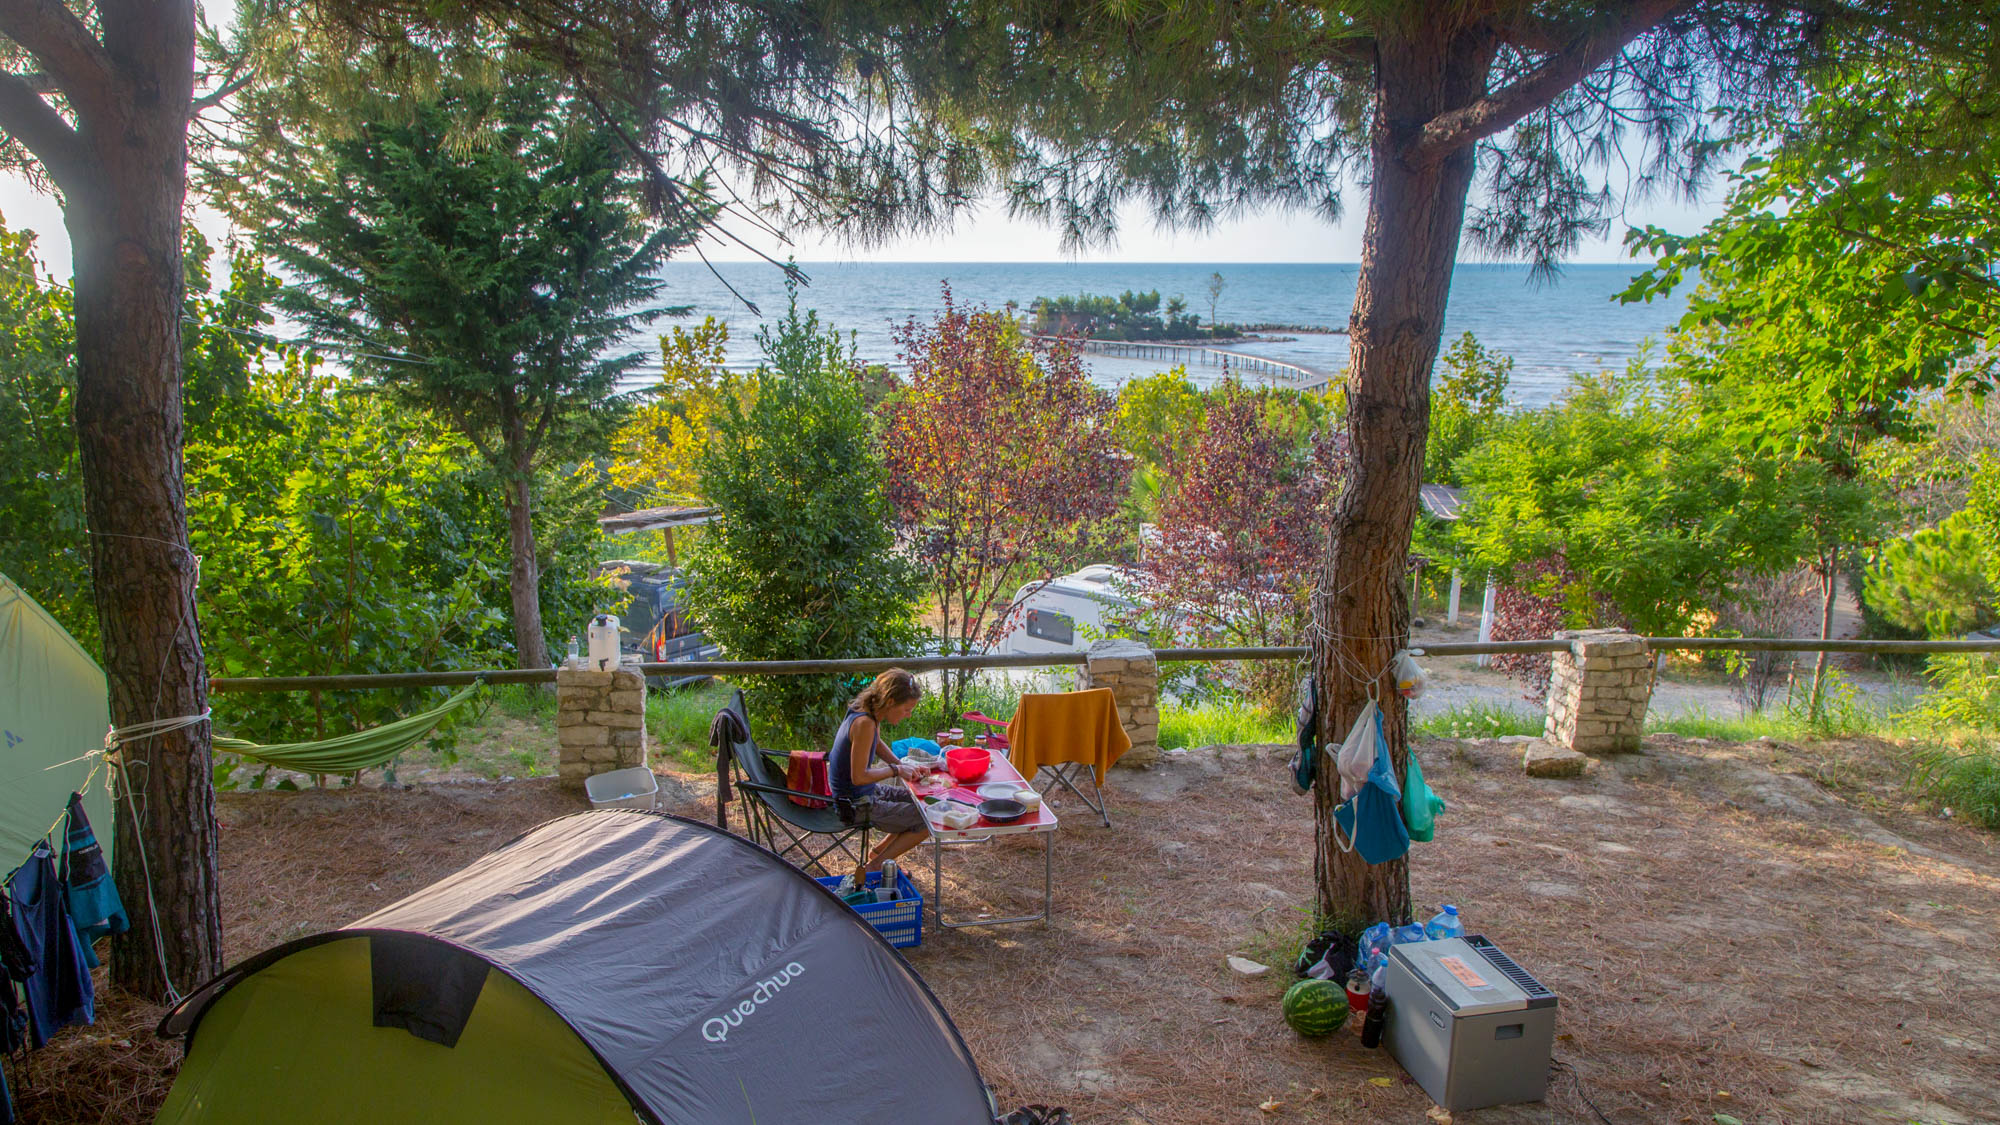 Am camping meer albanien Sommer 2016